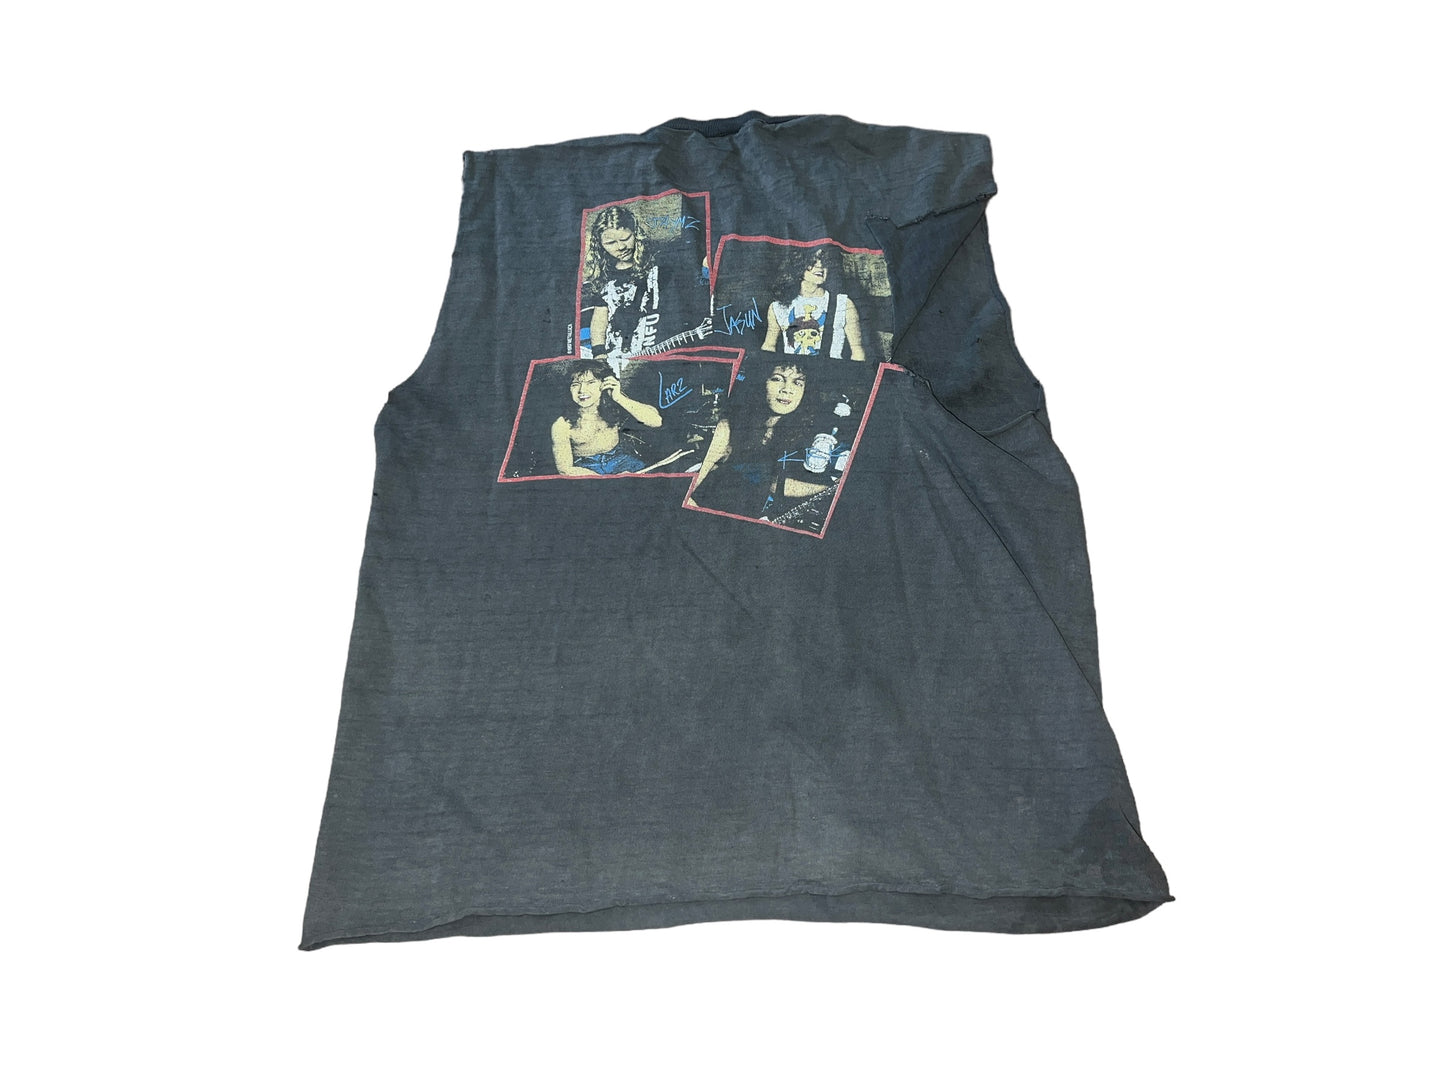 Vintage 1987 Metallica Shirt